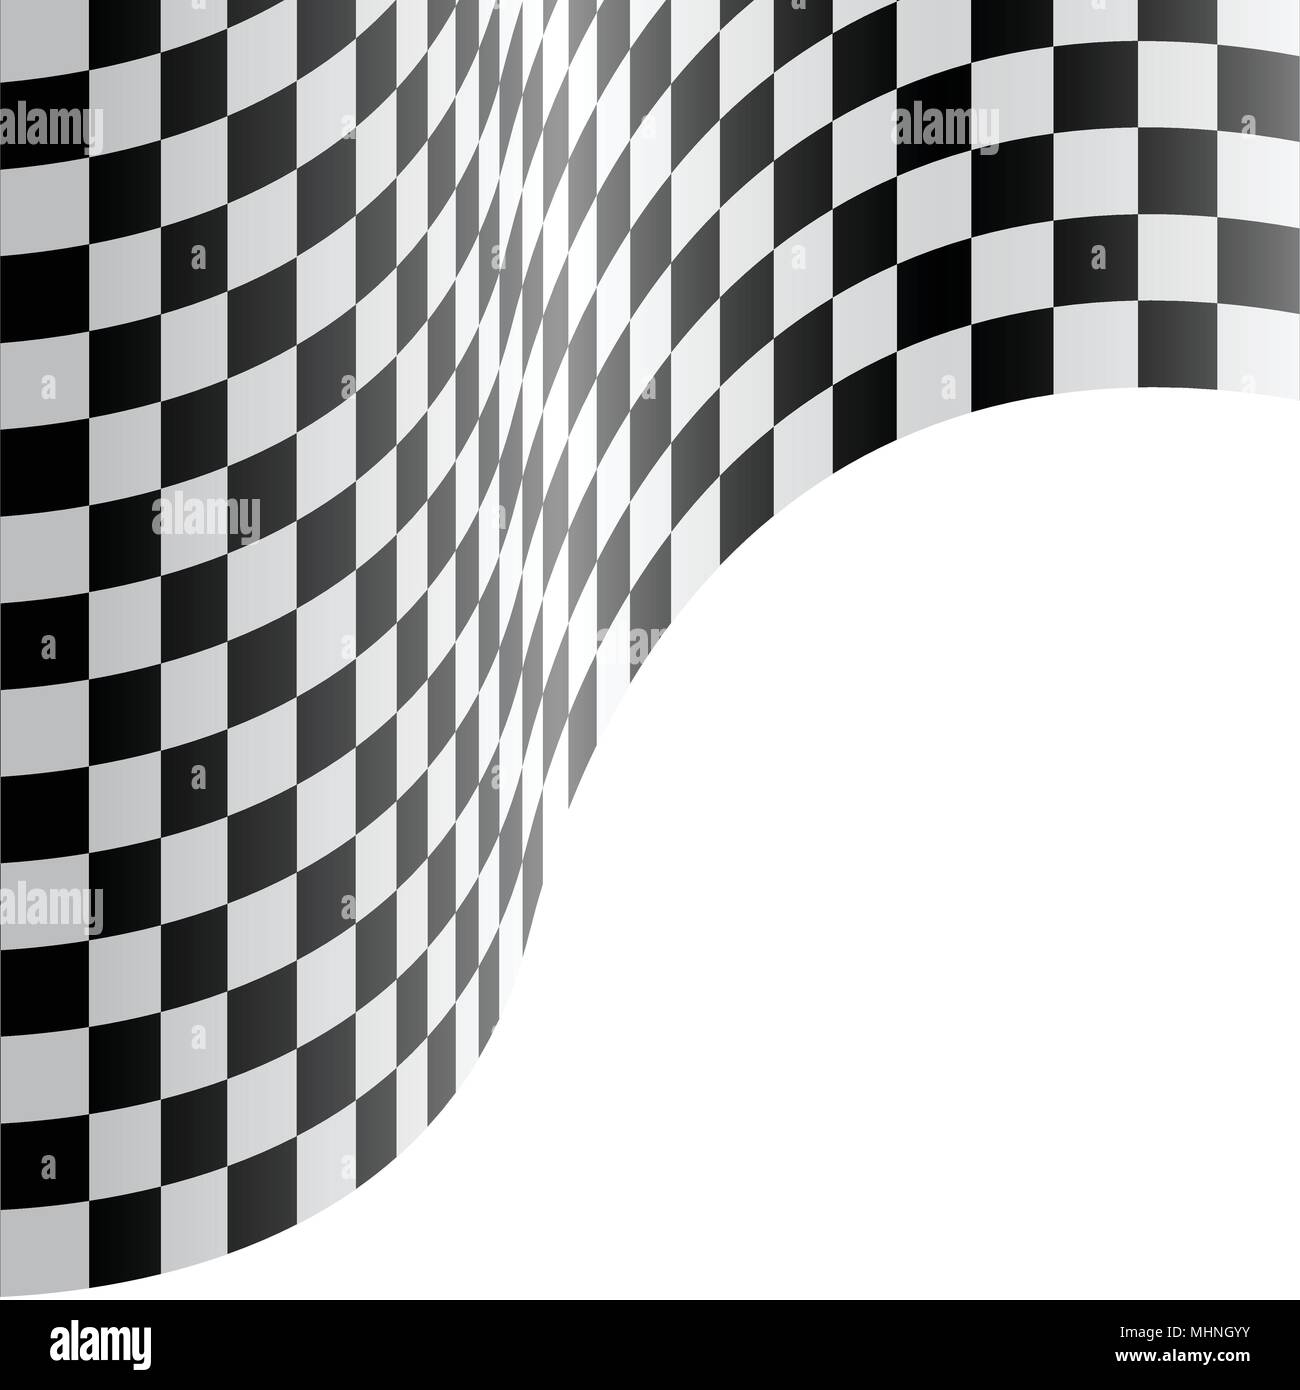 Checkered flag wave on white design race background vector illustration. Stock Vector